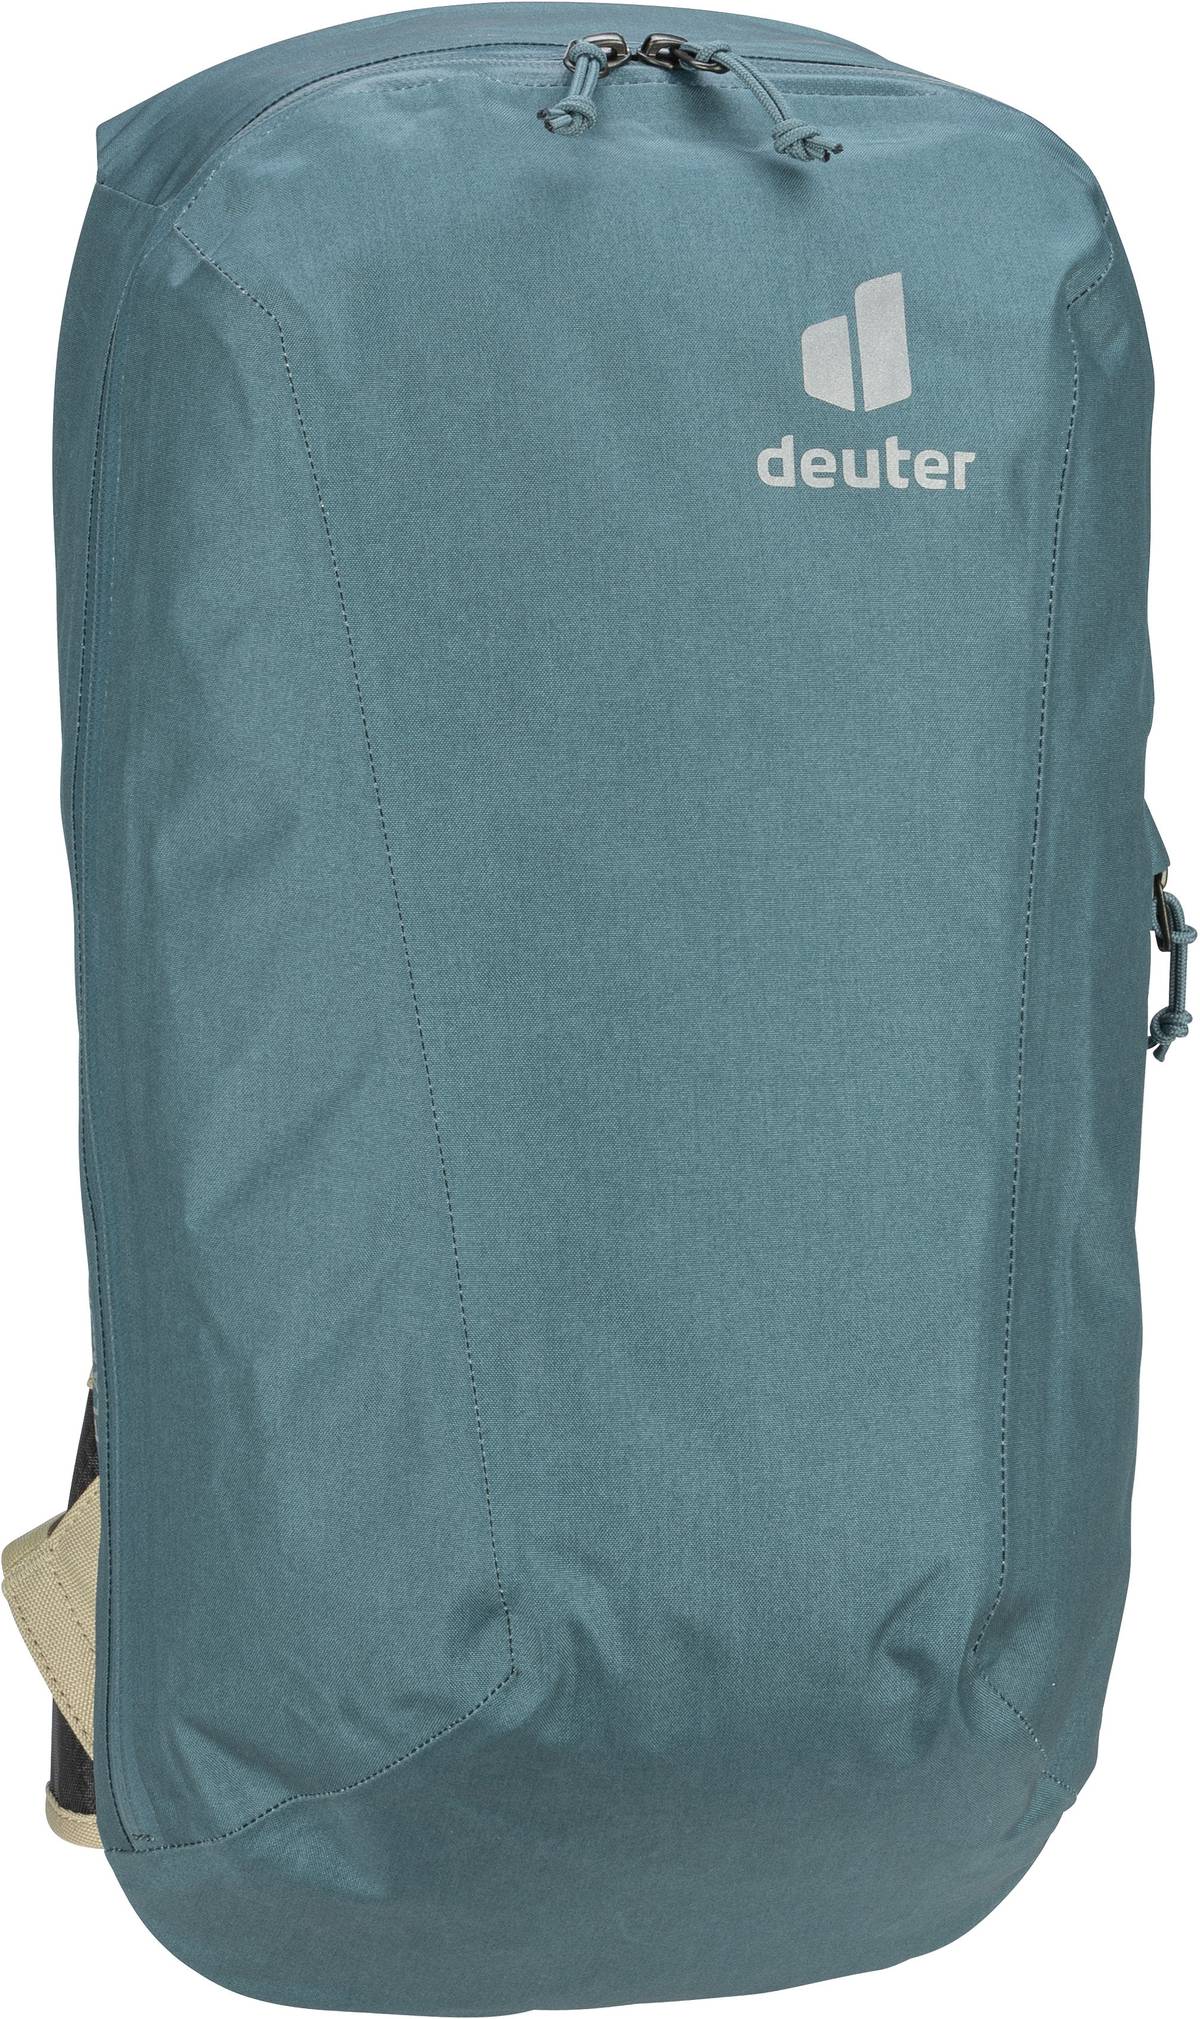 Deuter Plamort 12  in Petrol (12 Liter), Rucksack / Backpack